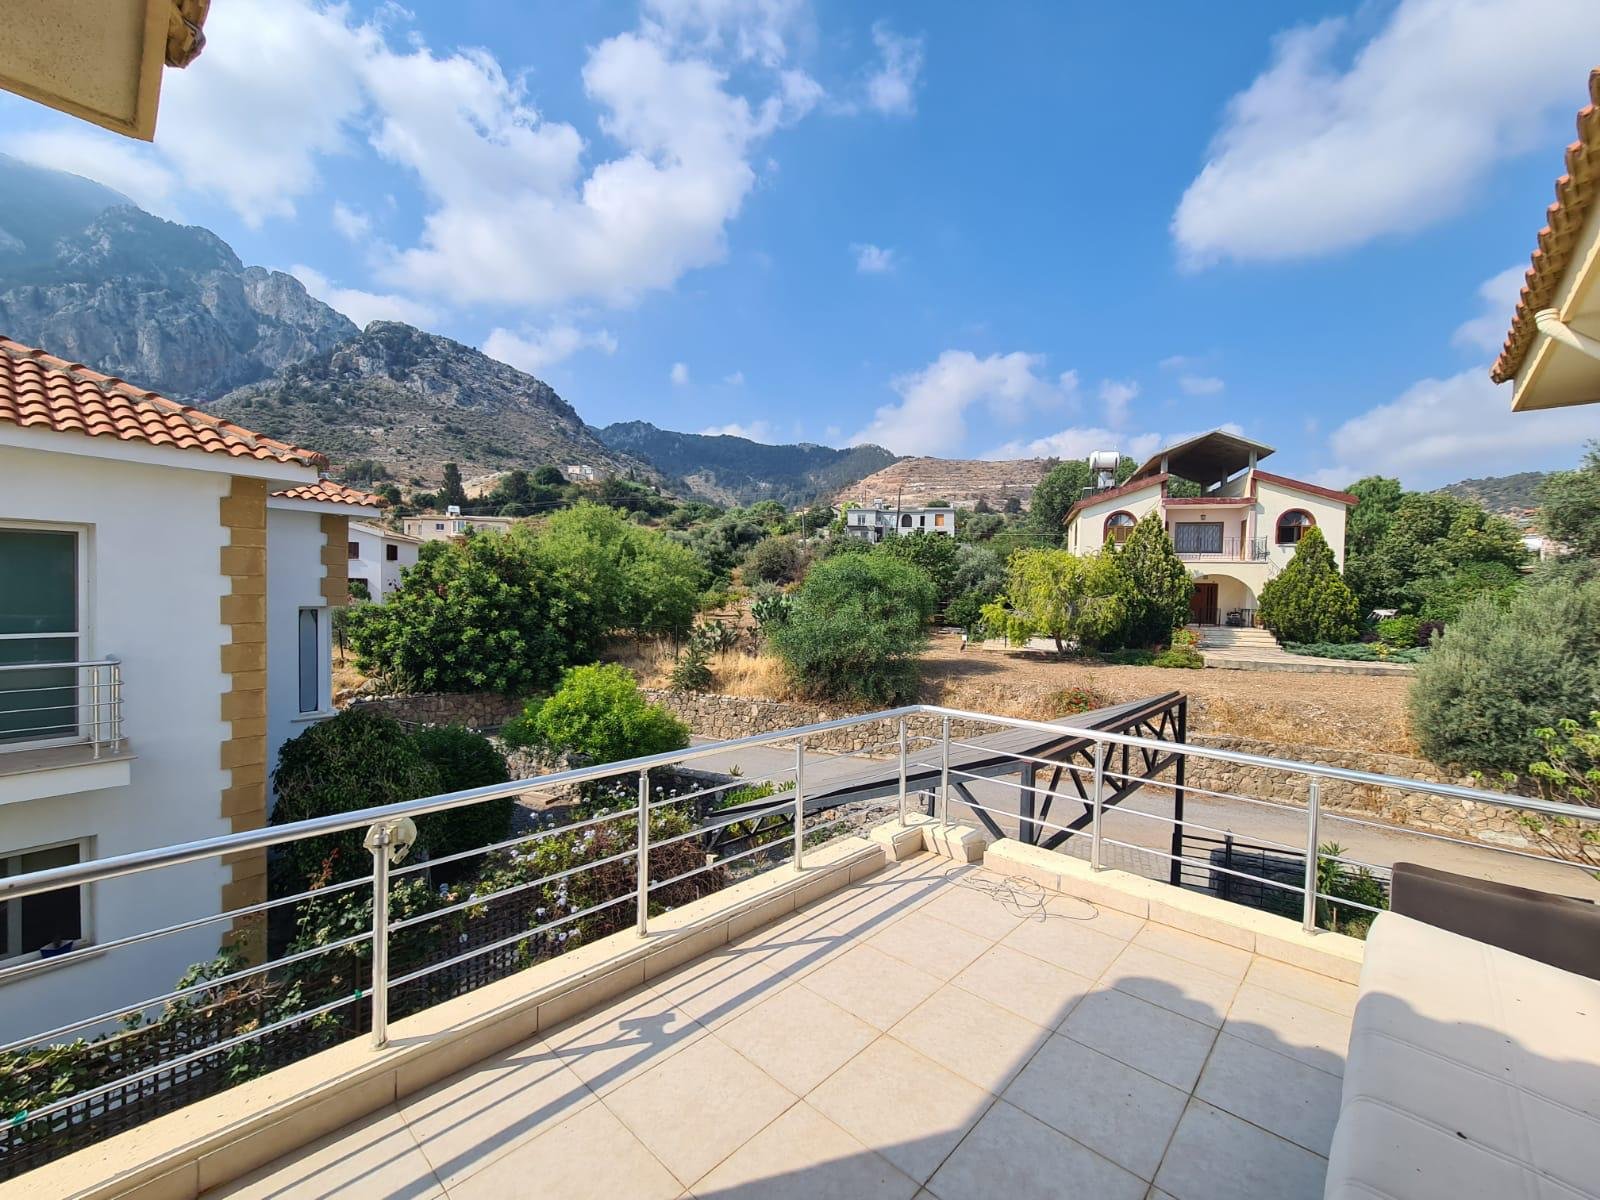 3 bedroom villa for sale in Kyrenia, Karshiyaka-10f25ae1-b978-4053-a4d2-38754182ee98